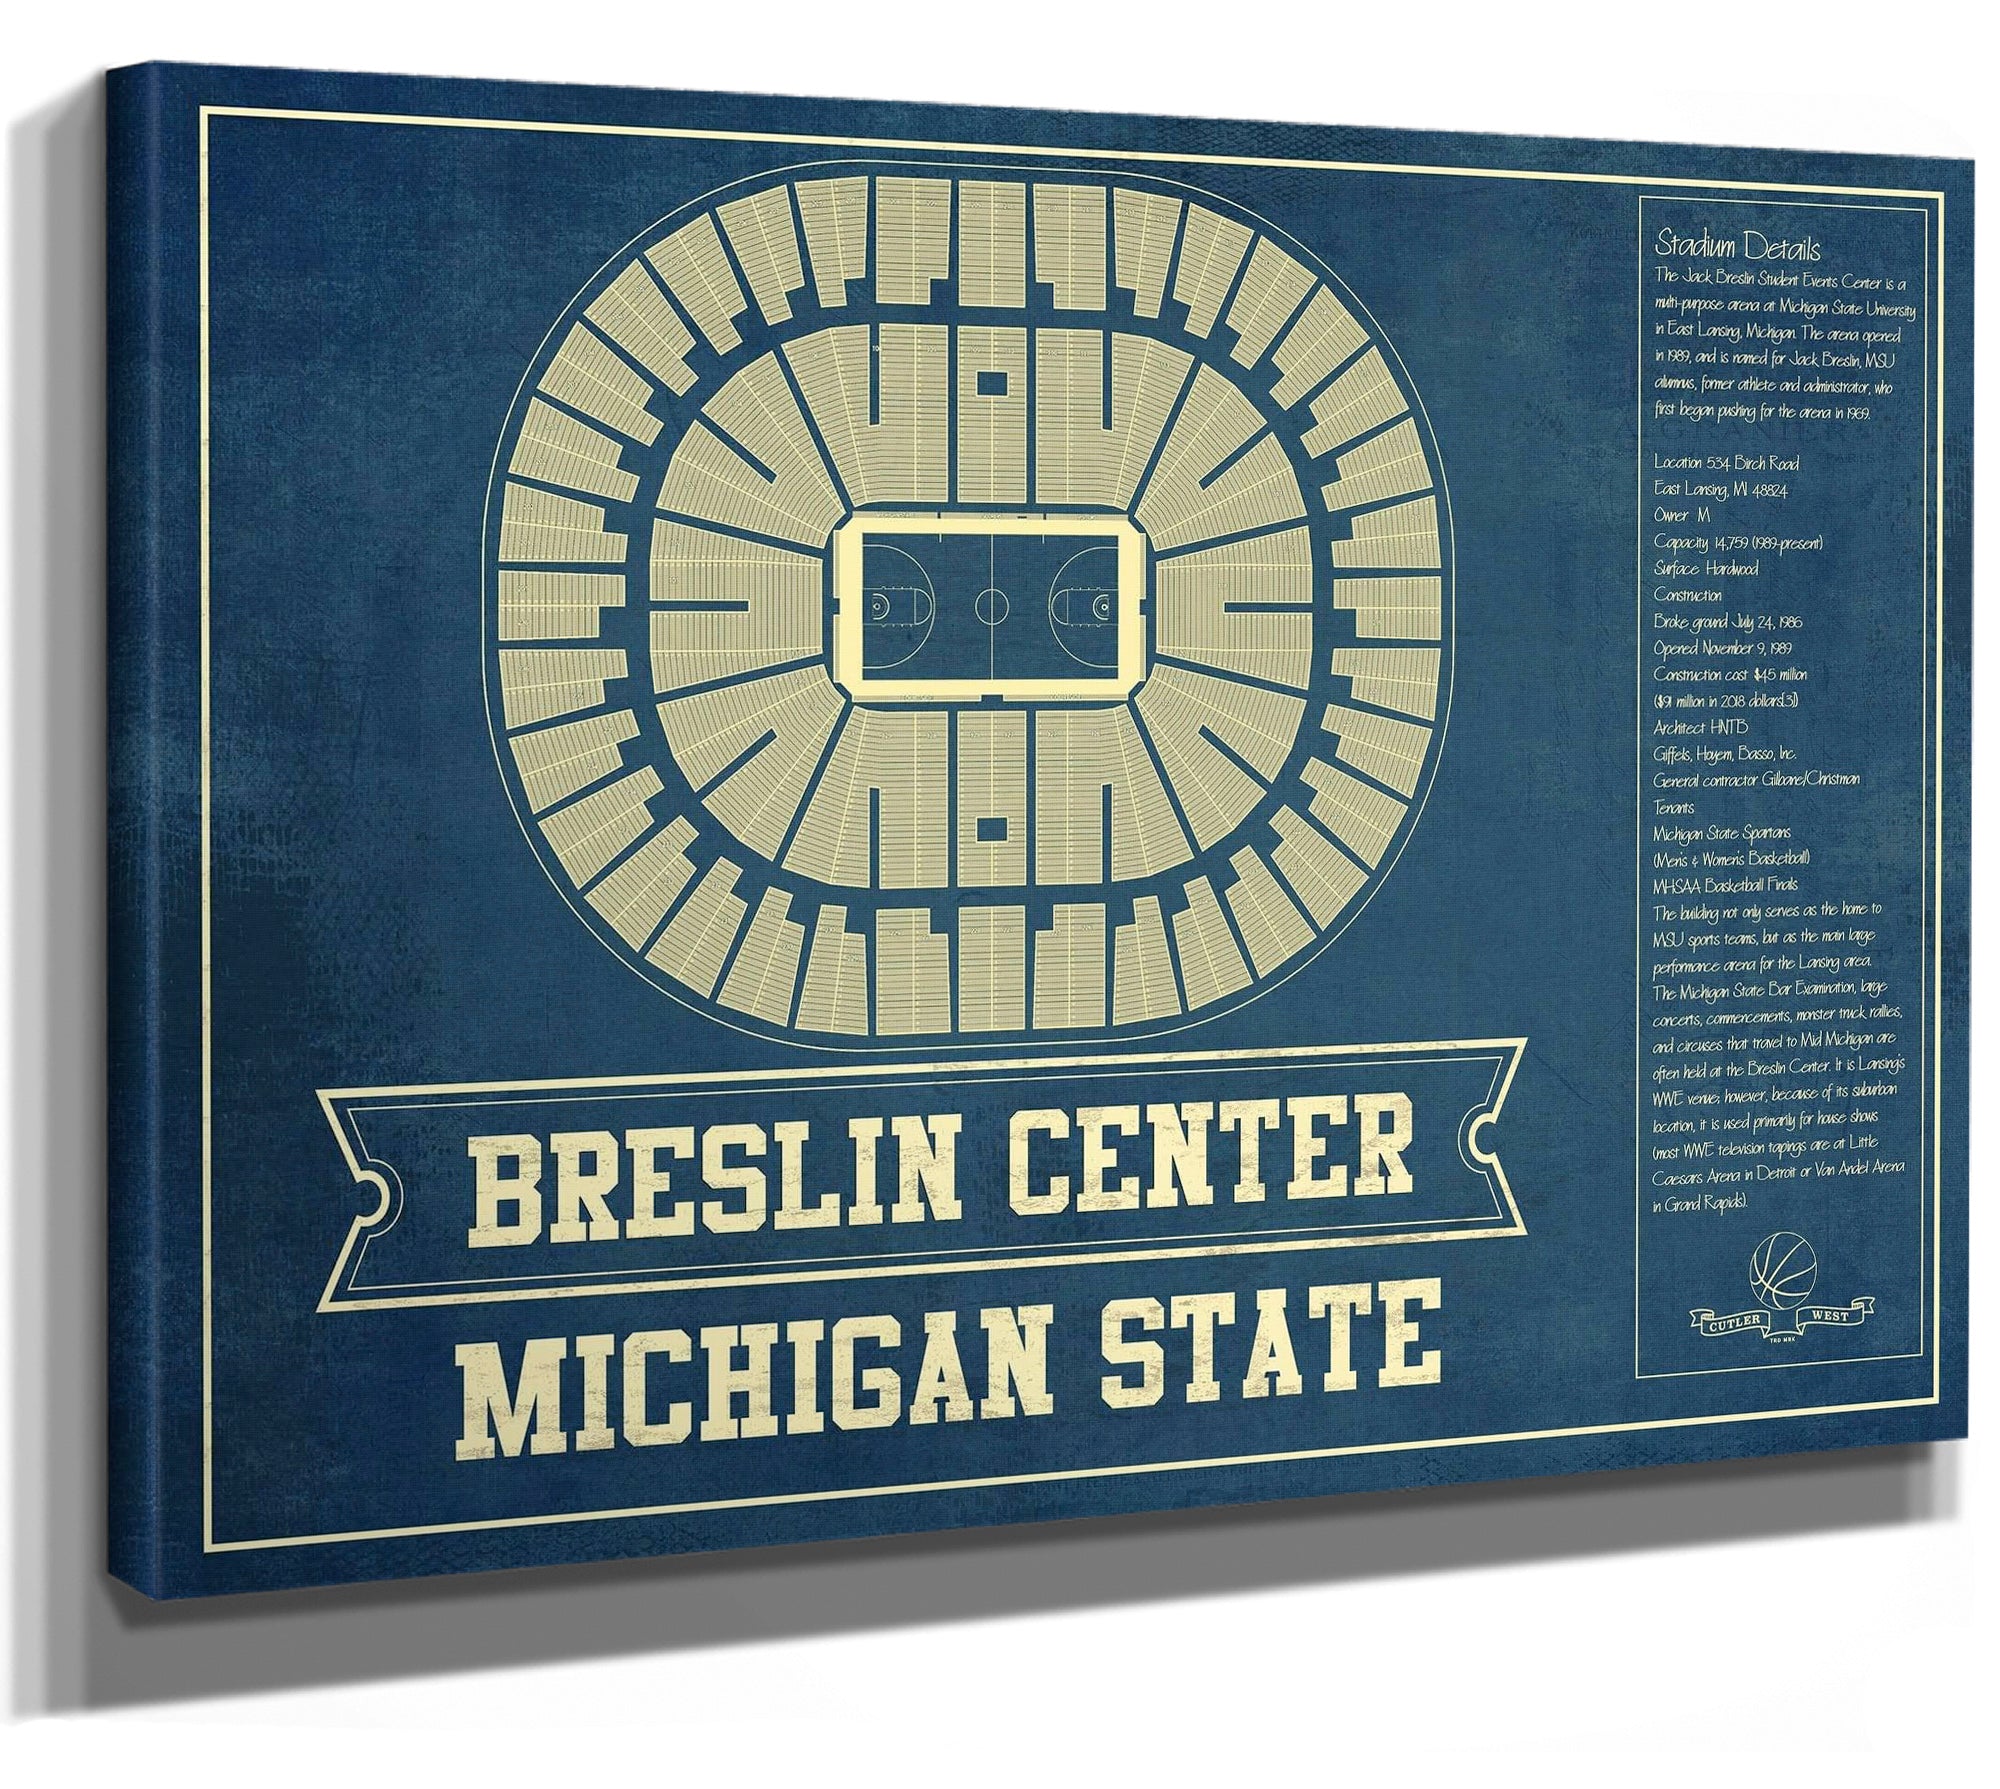 Breslin Student Events Center - Michigan State Spartans NCAA College Basketball Blueprint Art